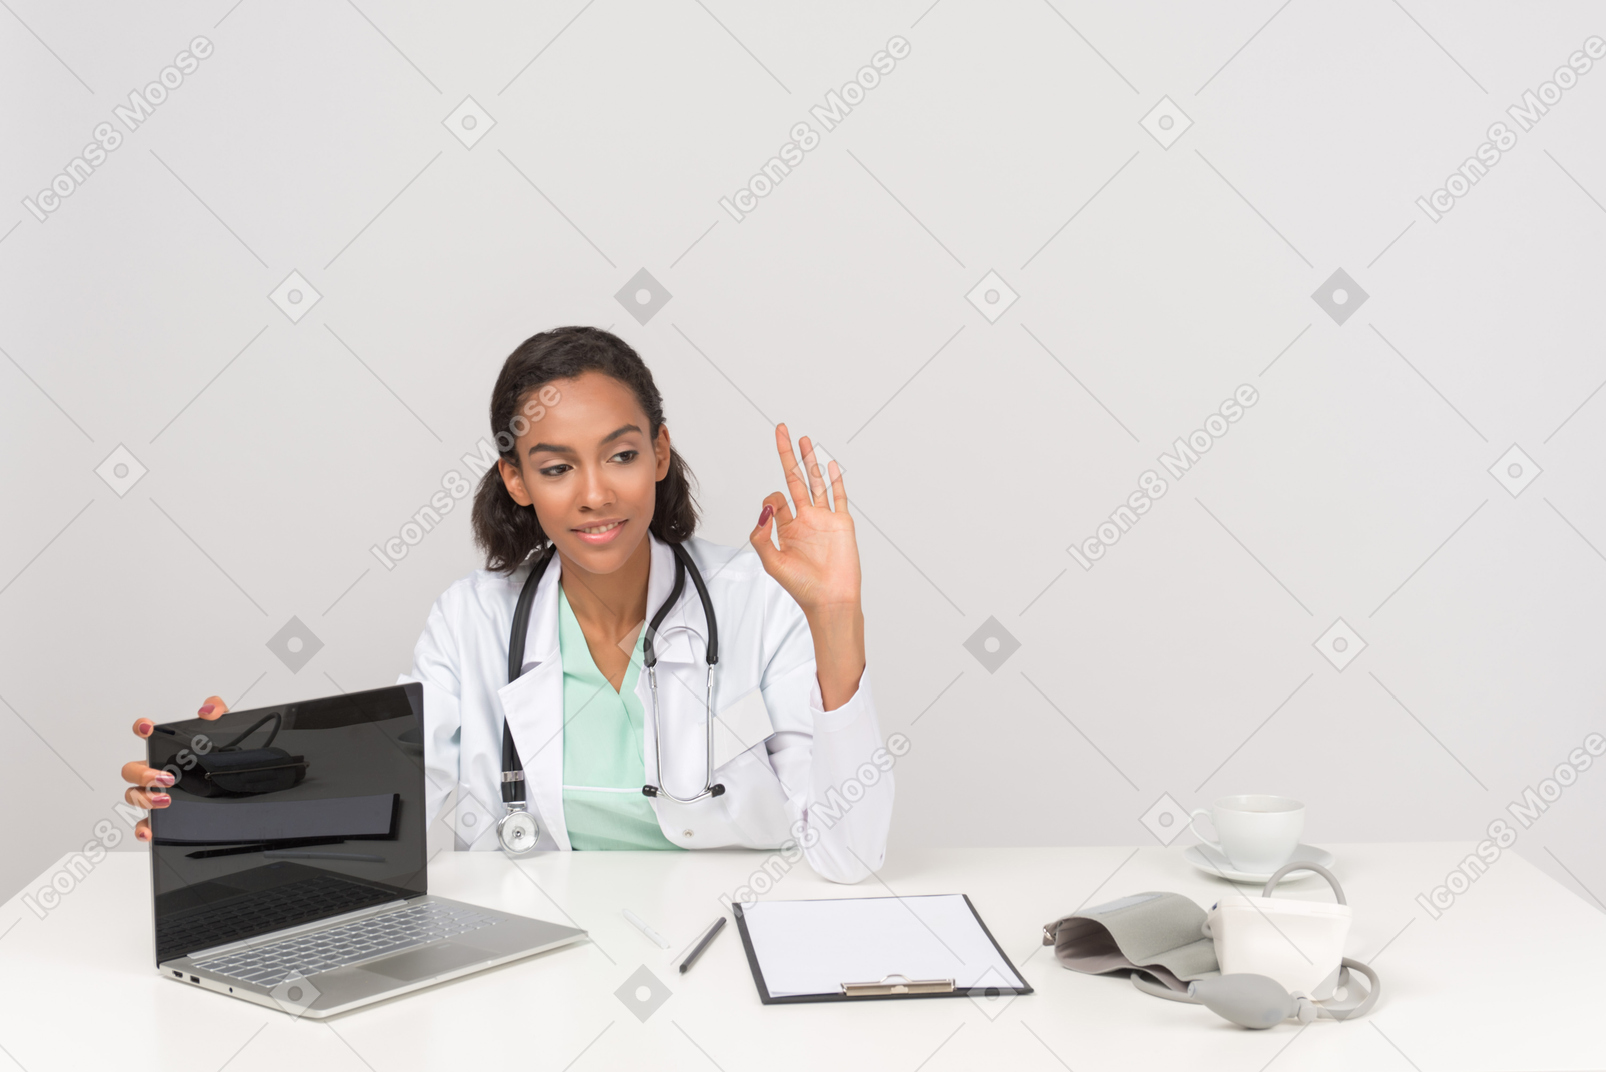 Female doctor showing ok gesture